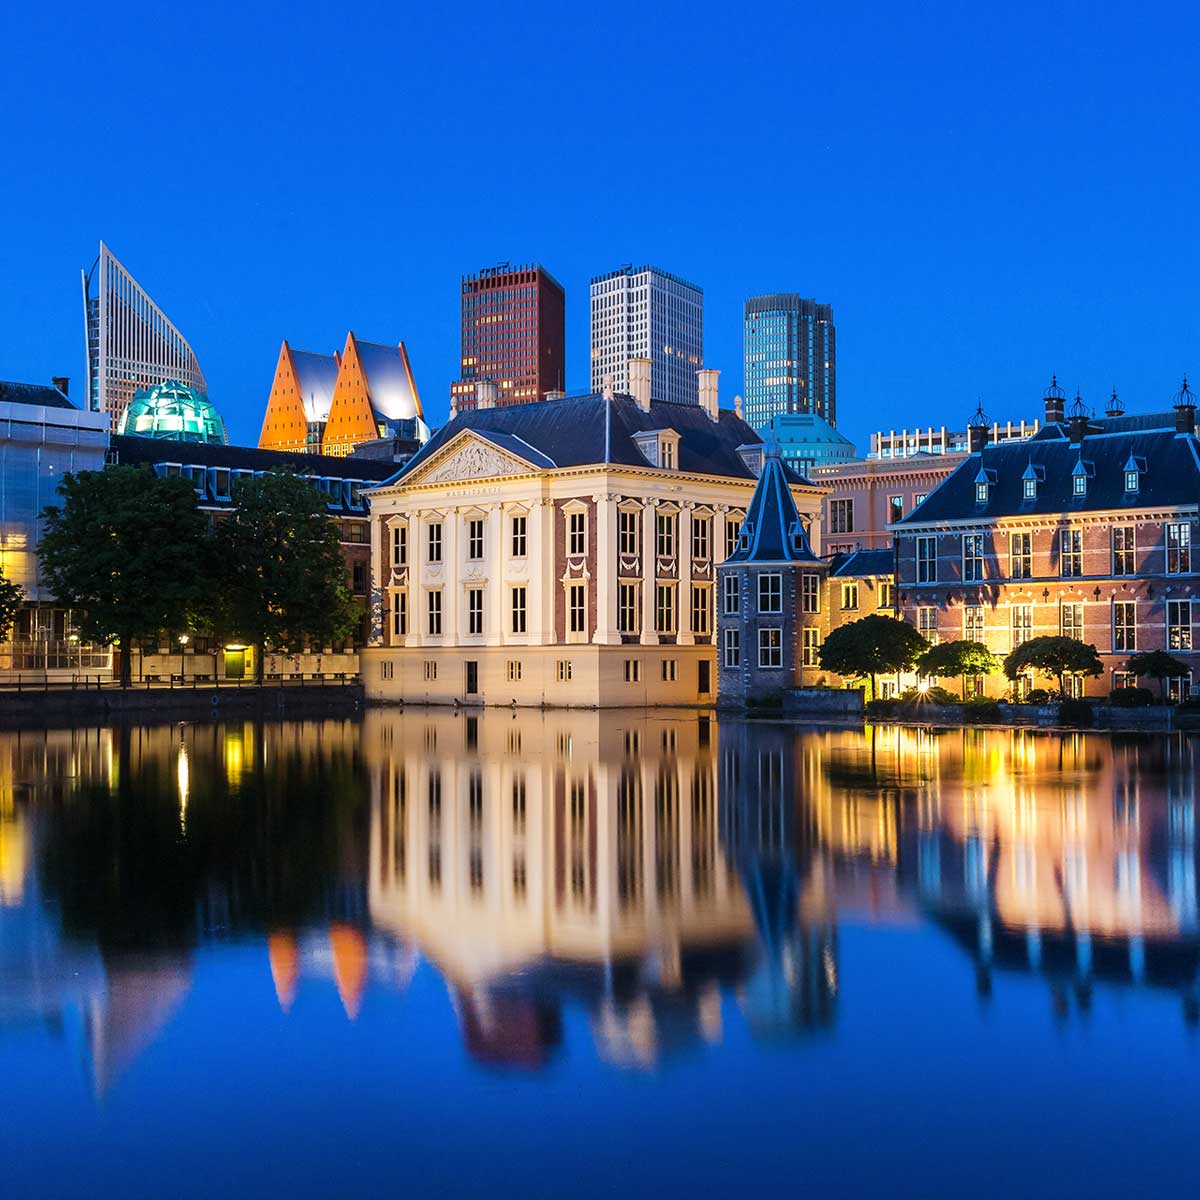 The Hague 2016